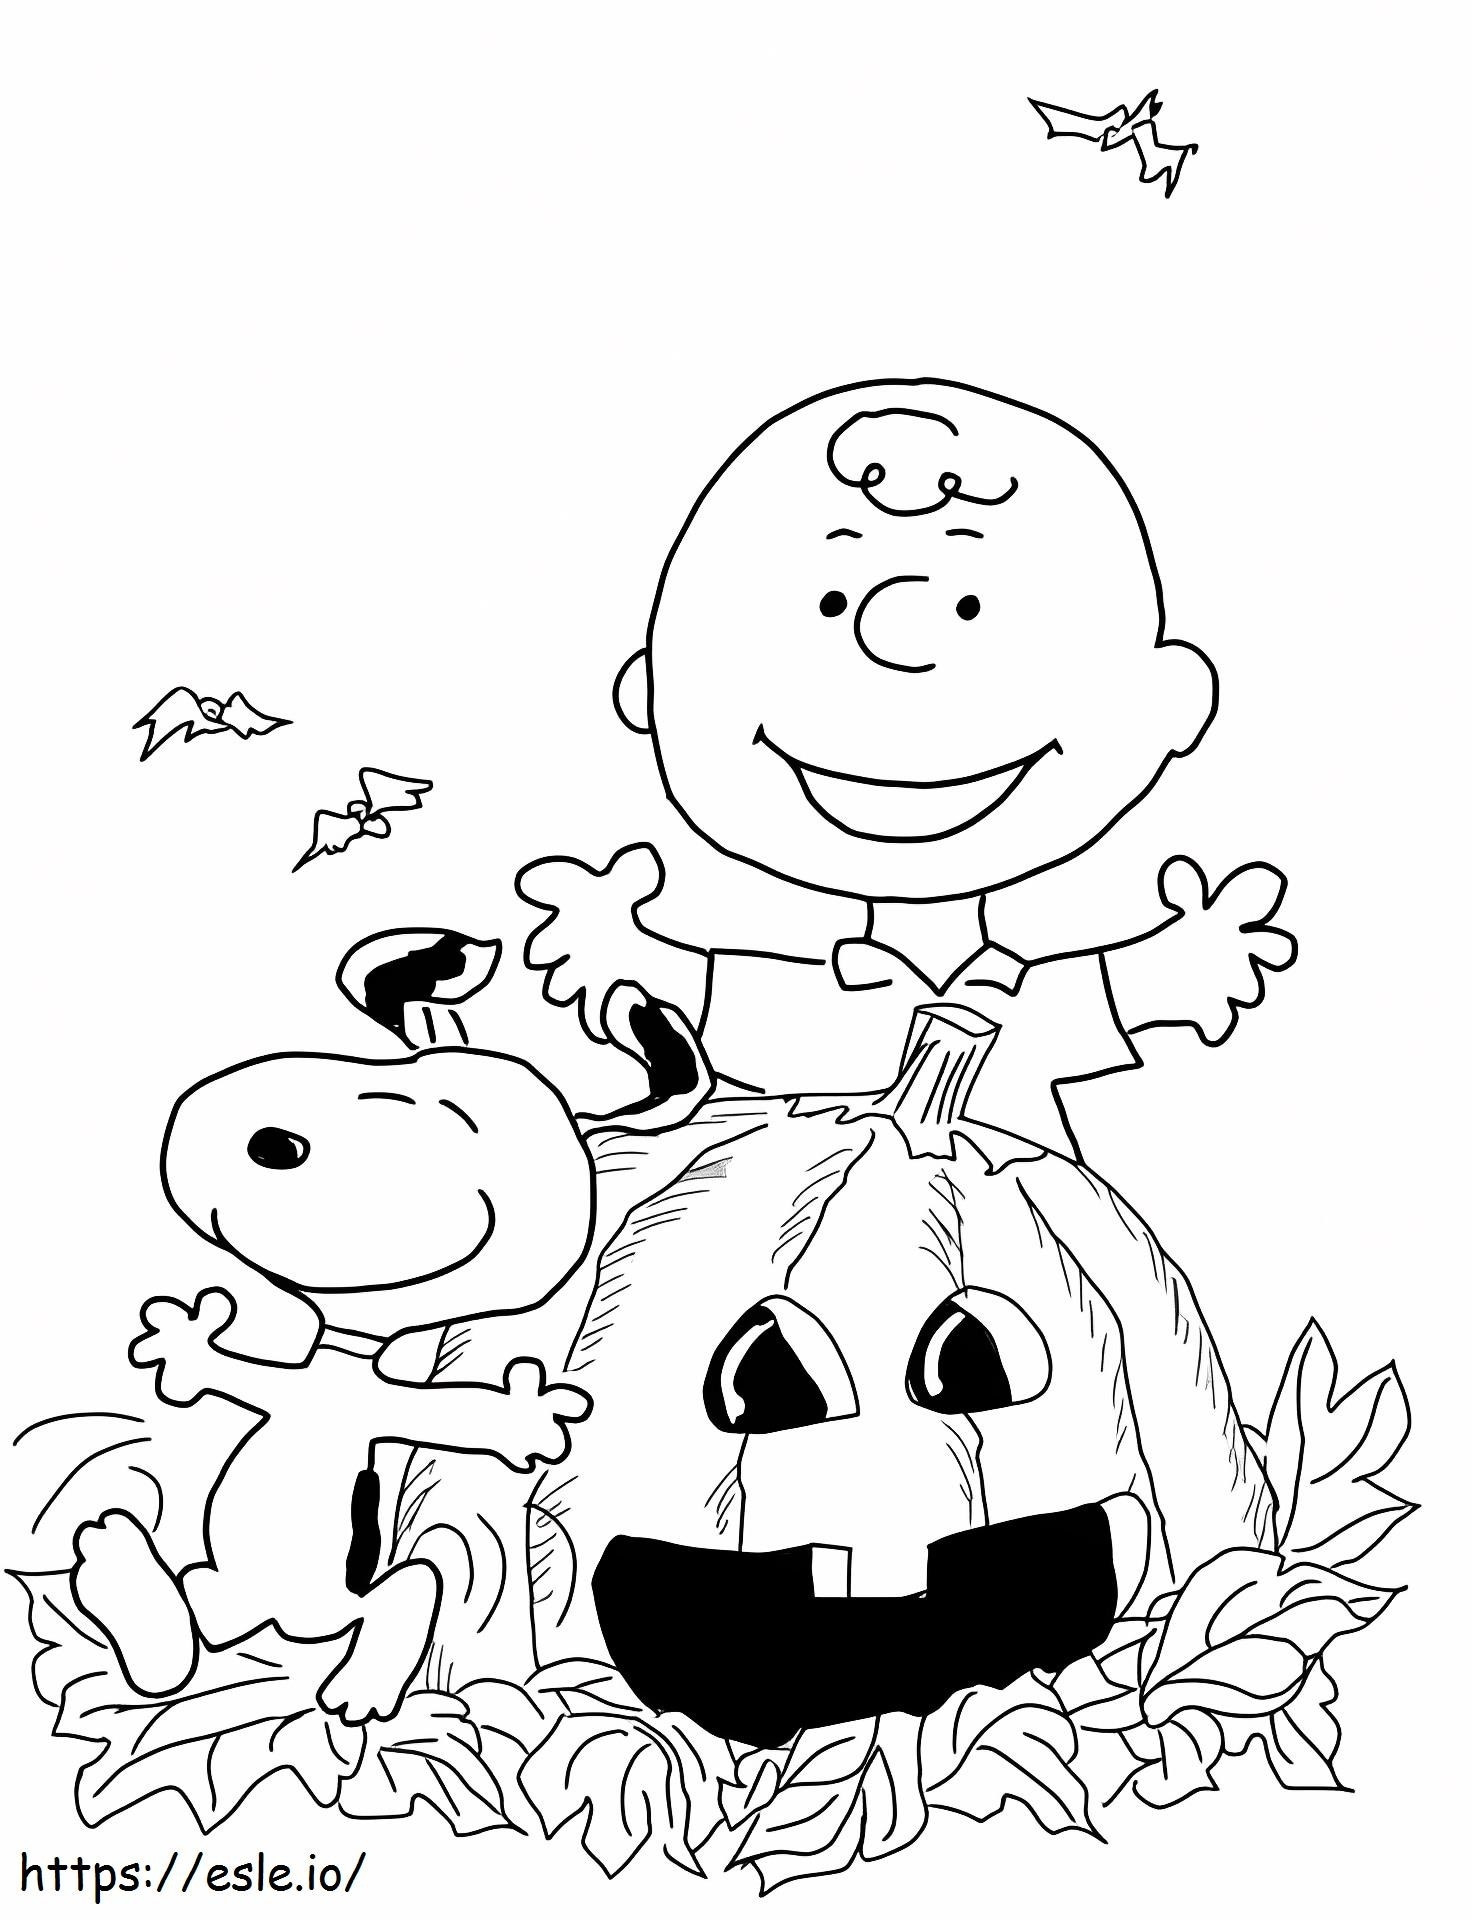 Charlie Y Snoopy Celebran'ın Cadılar Bayramı boyama